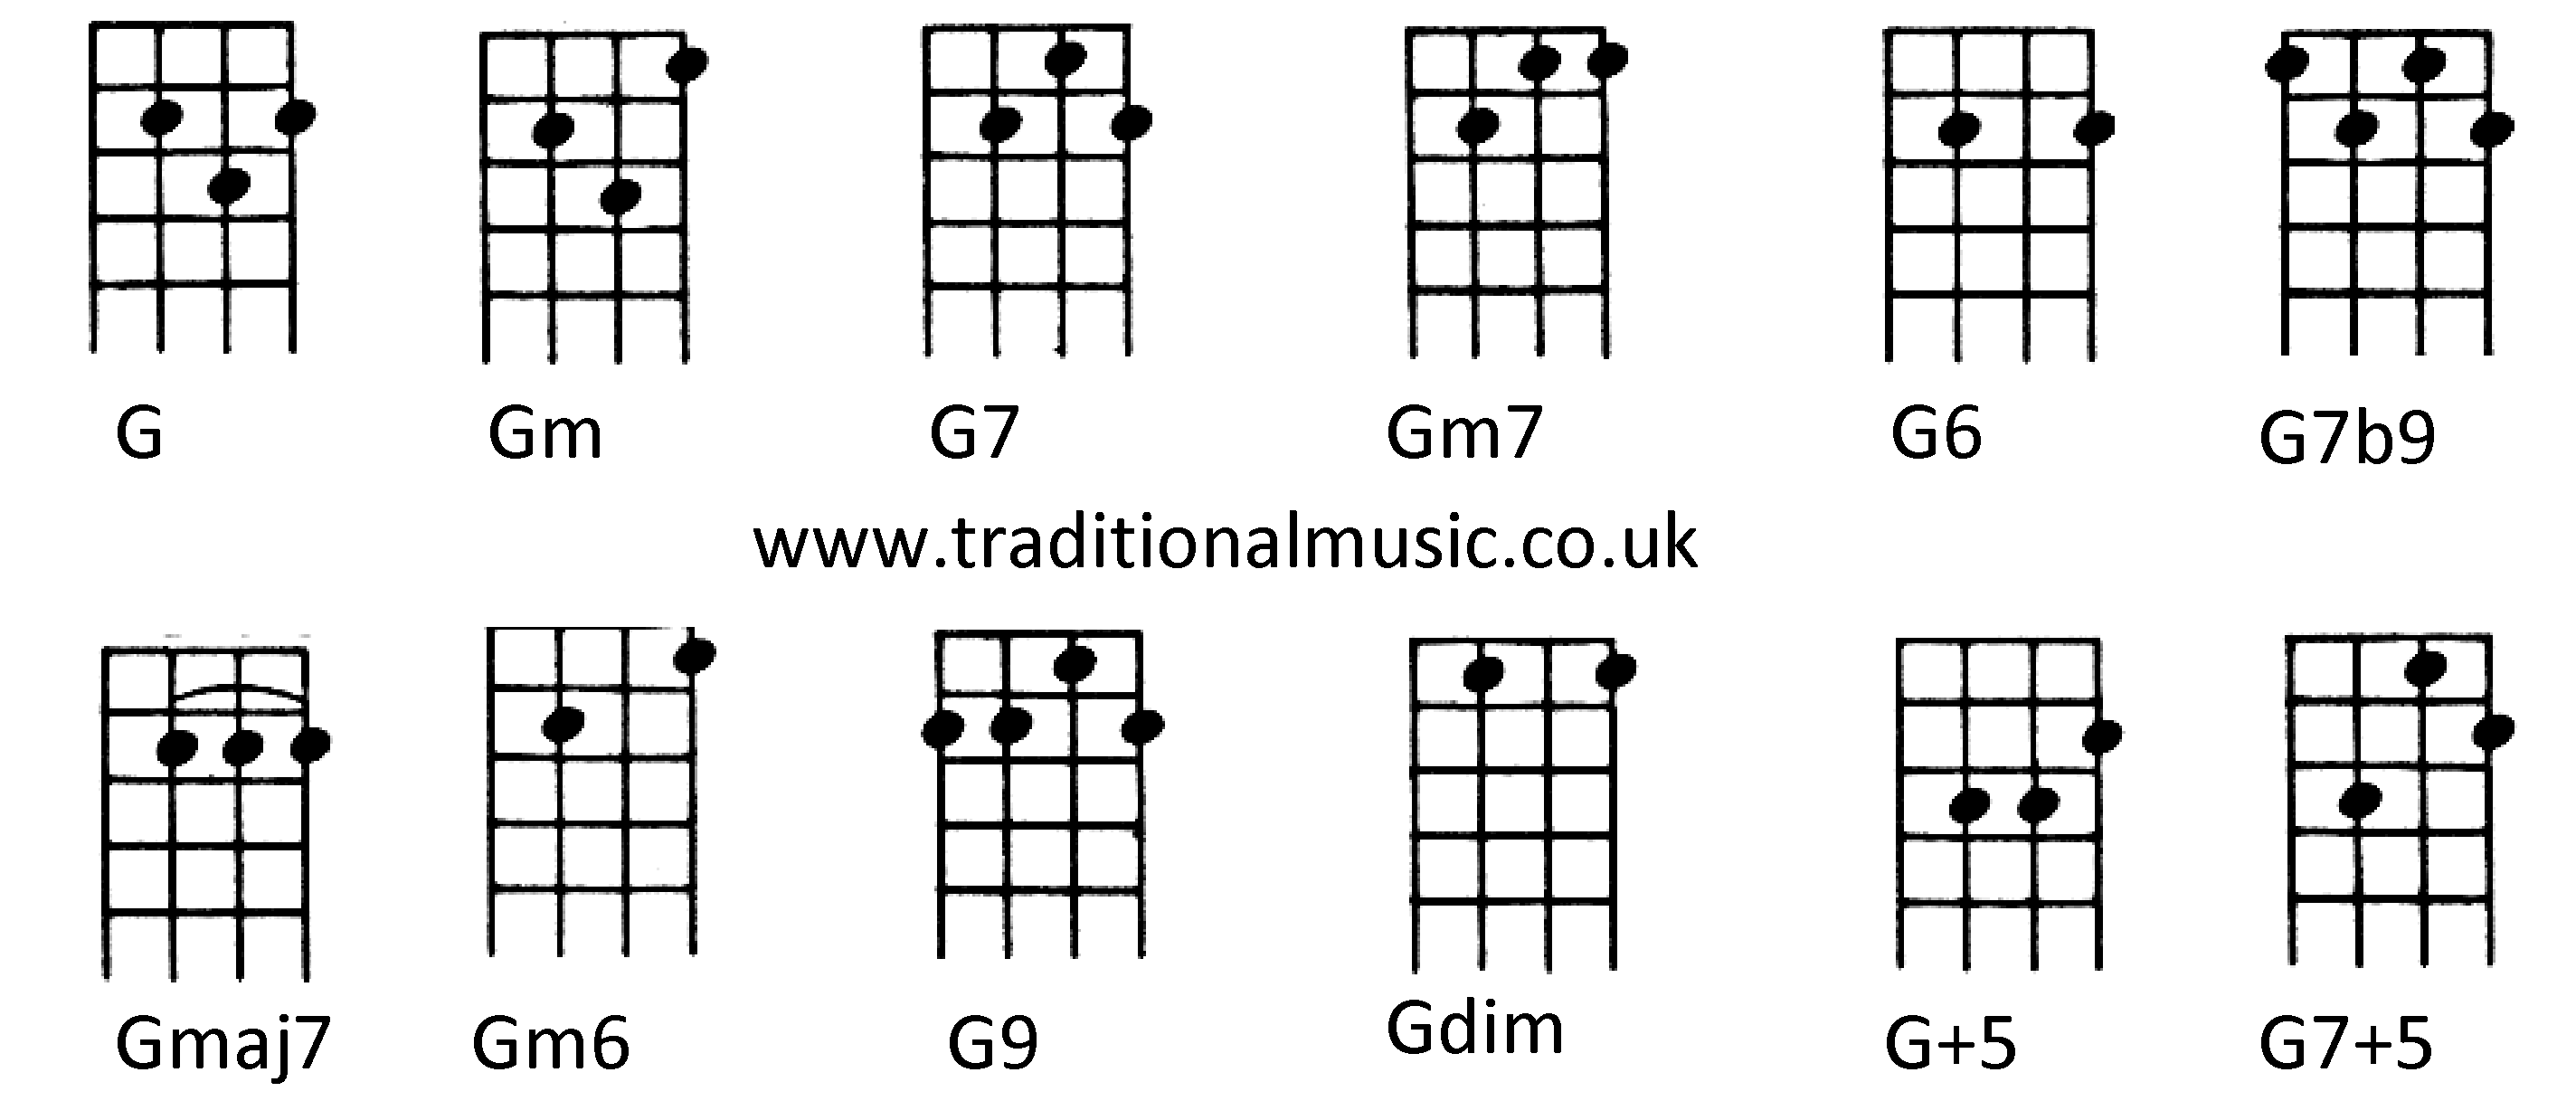 Chords for Ukulele (C tuning) G Gm G7 Gm7 G6 G7b9 Gmaj7 Gm6 G9 Gdim G+5 G7+5